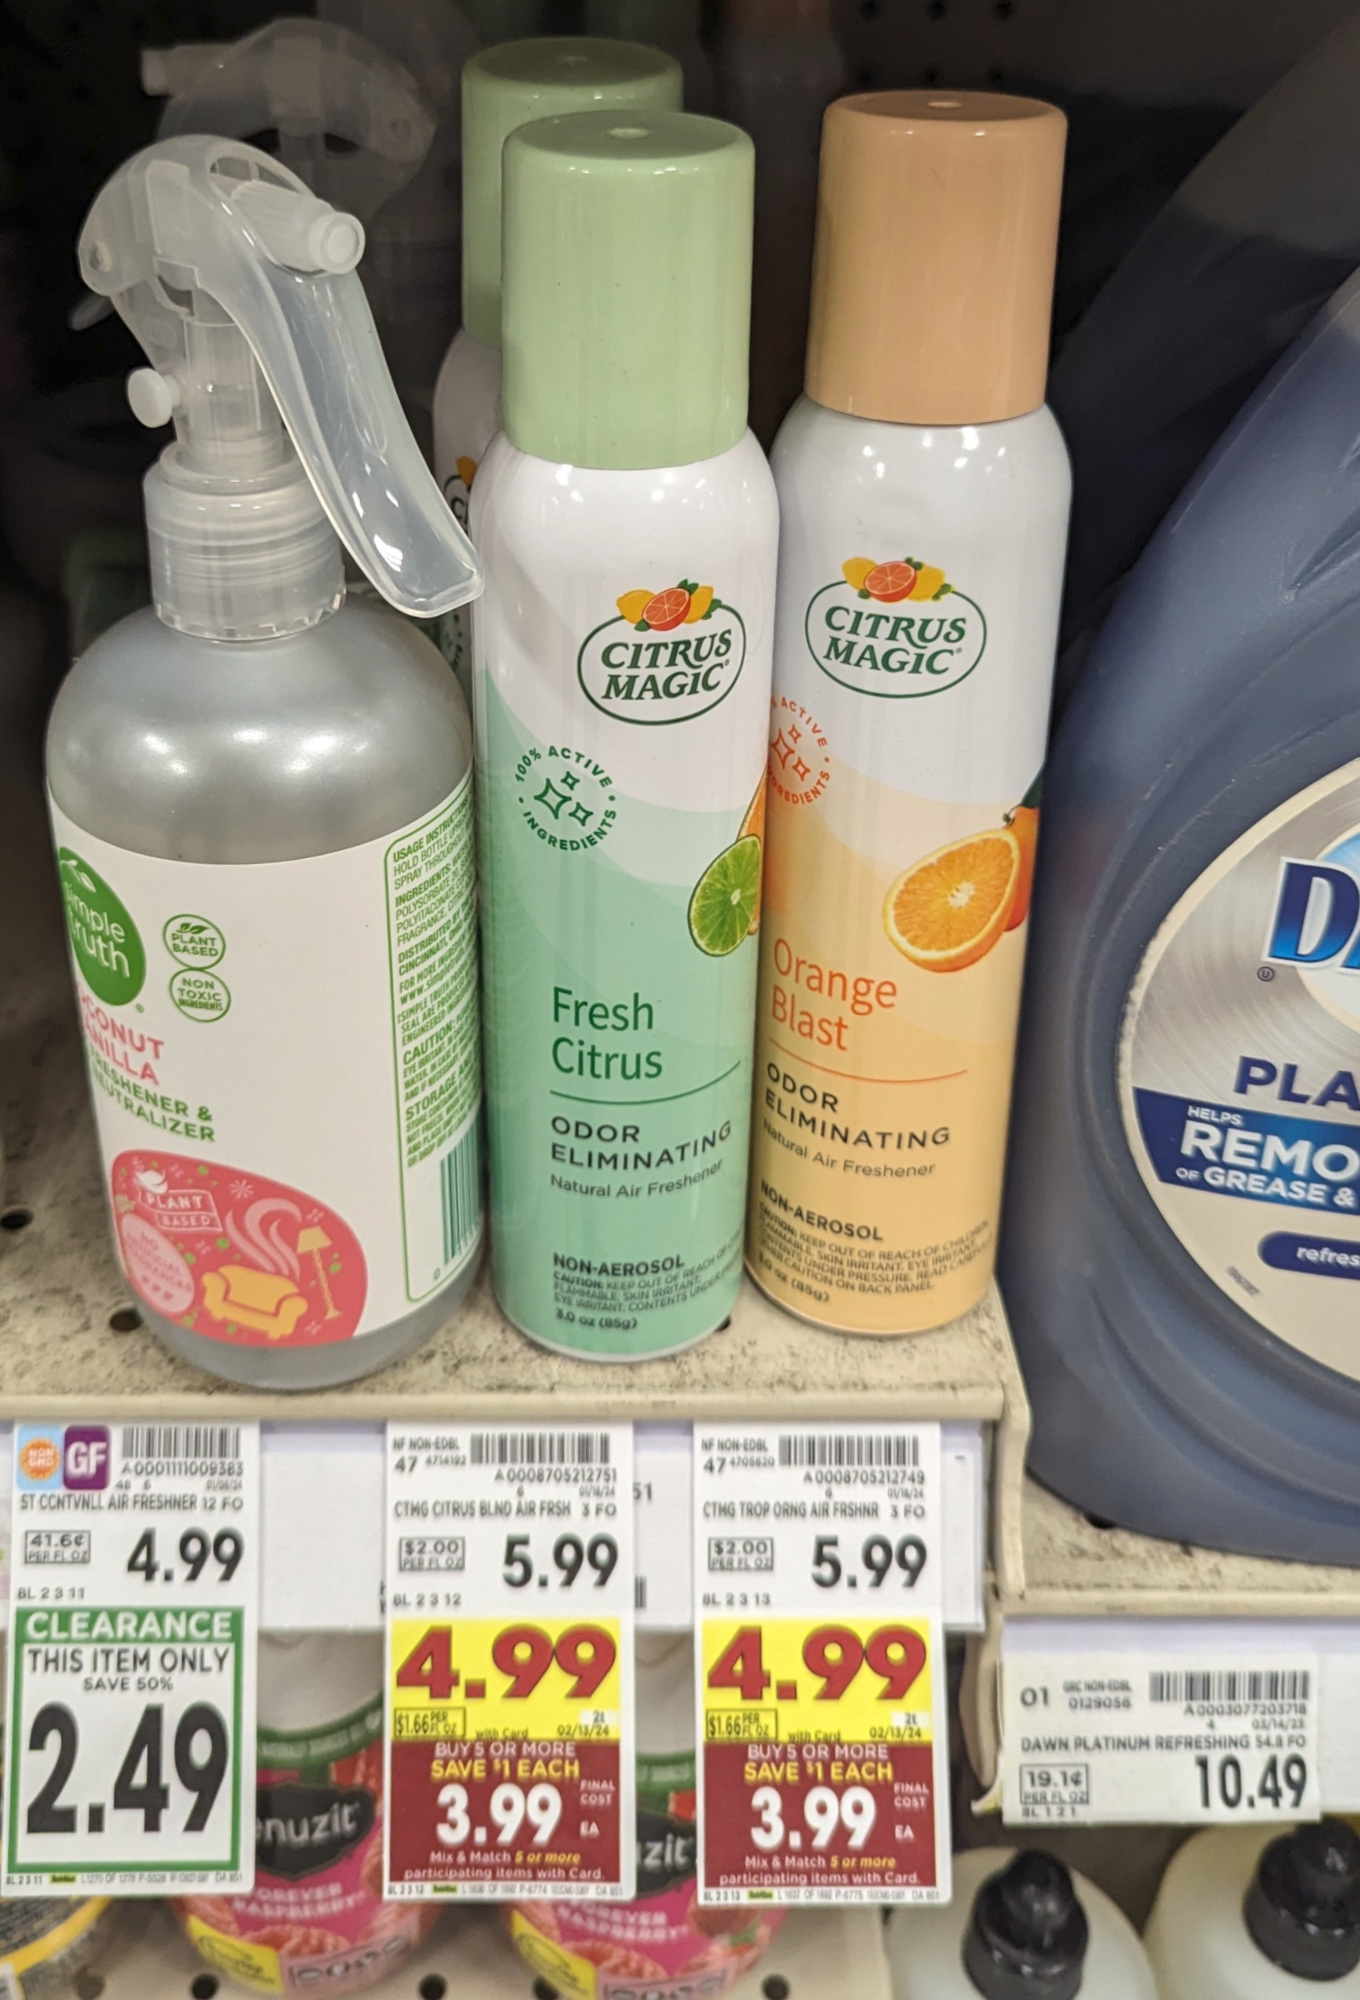 Citrus Magic Odor Eliminating Spray As Low As $2.99 At Kroger